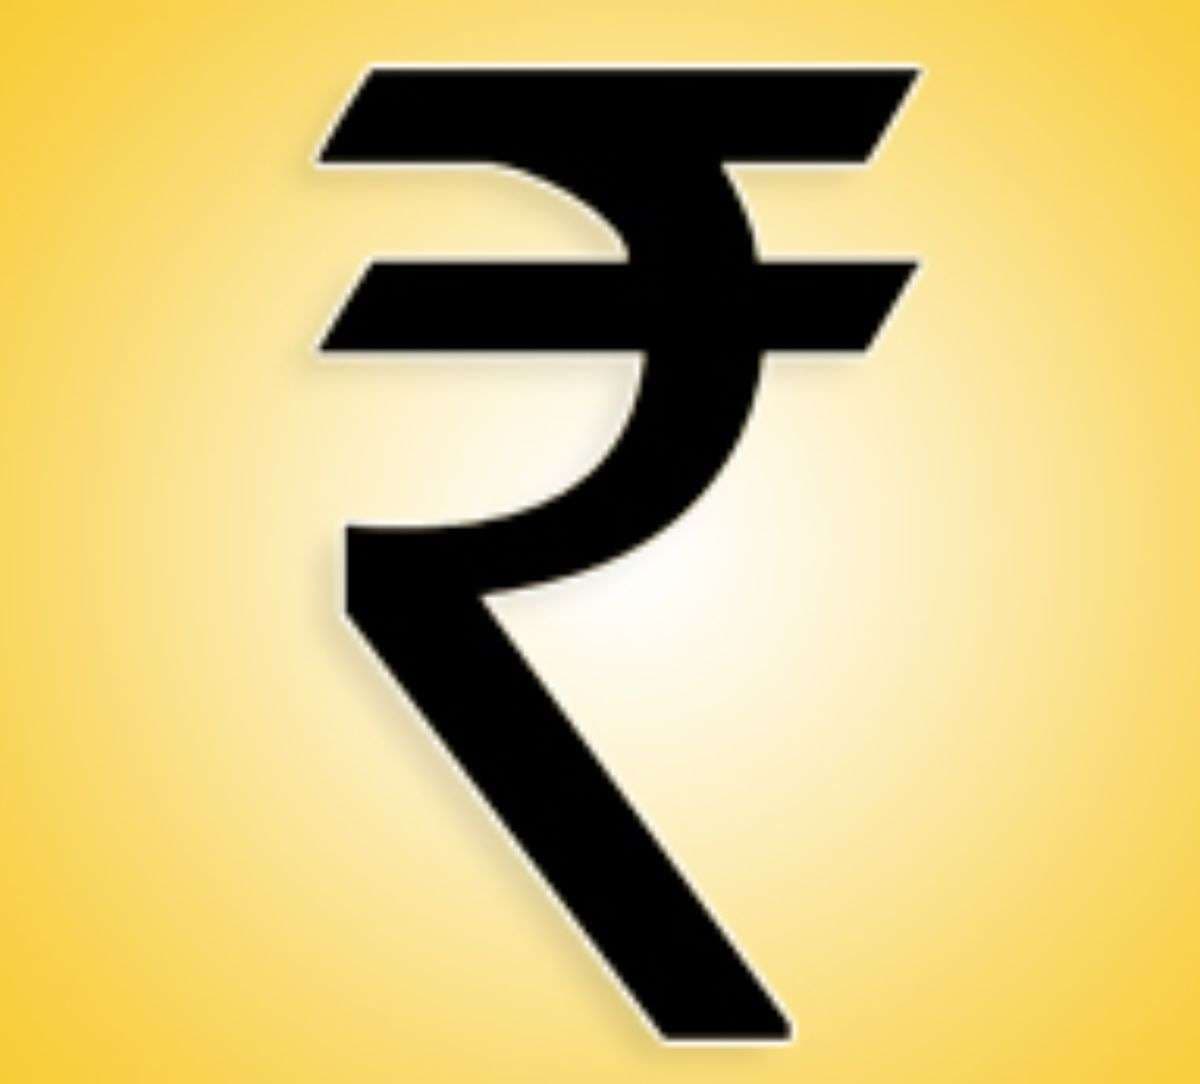 भारतीय रुपए का प्रतीक चिन्ह (symbol of Indian rupee)